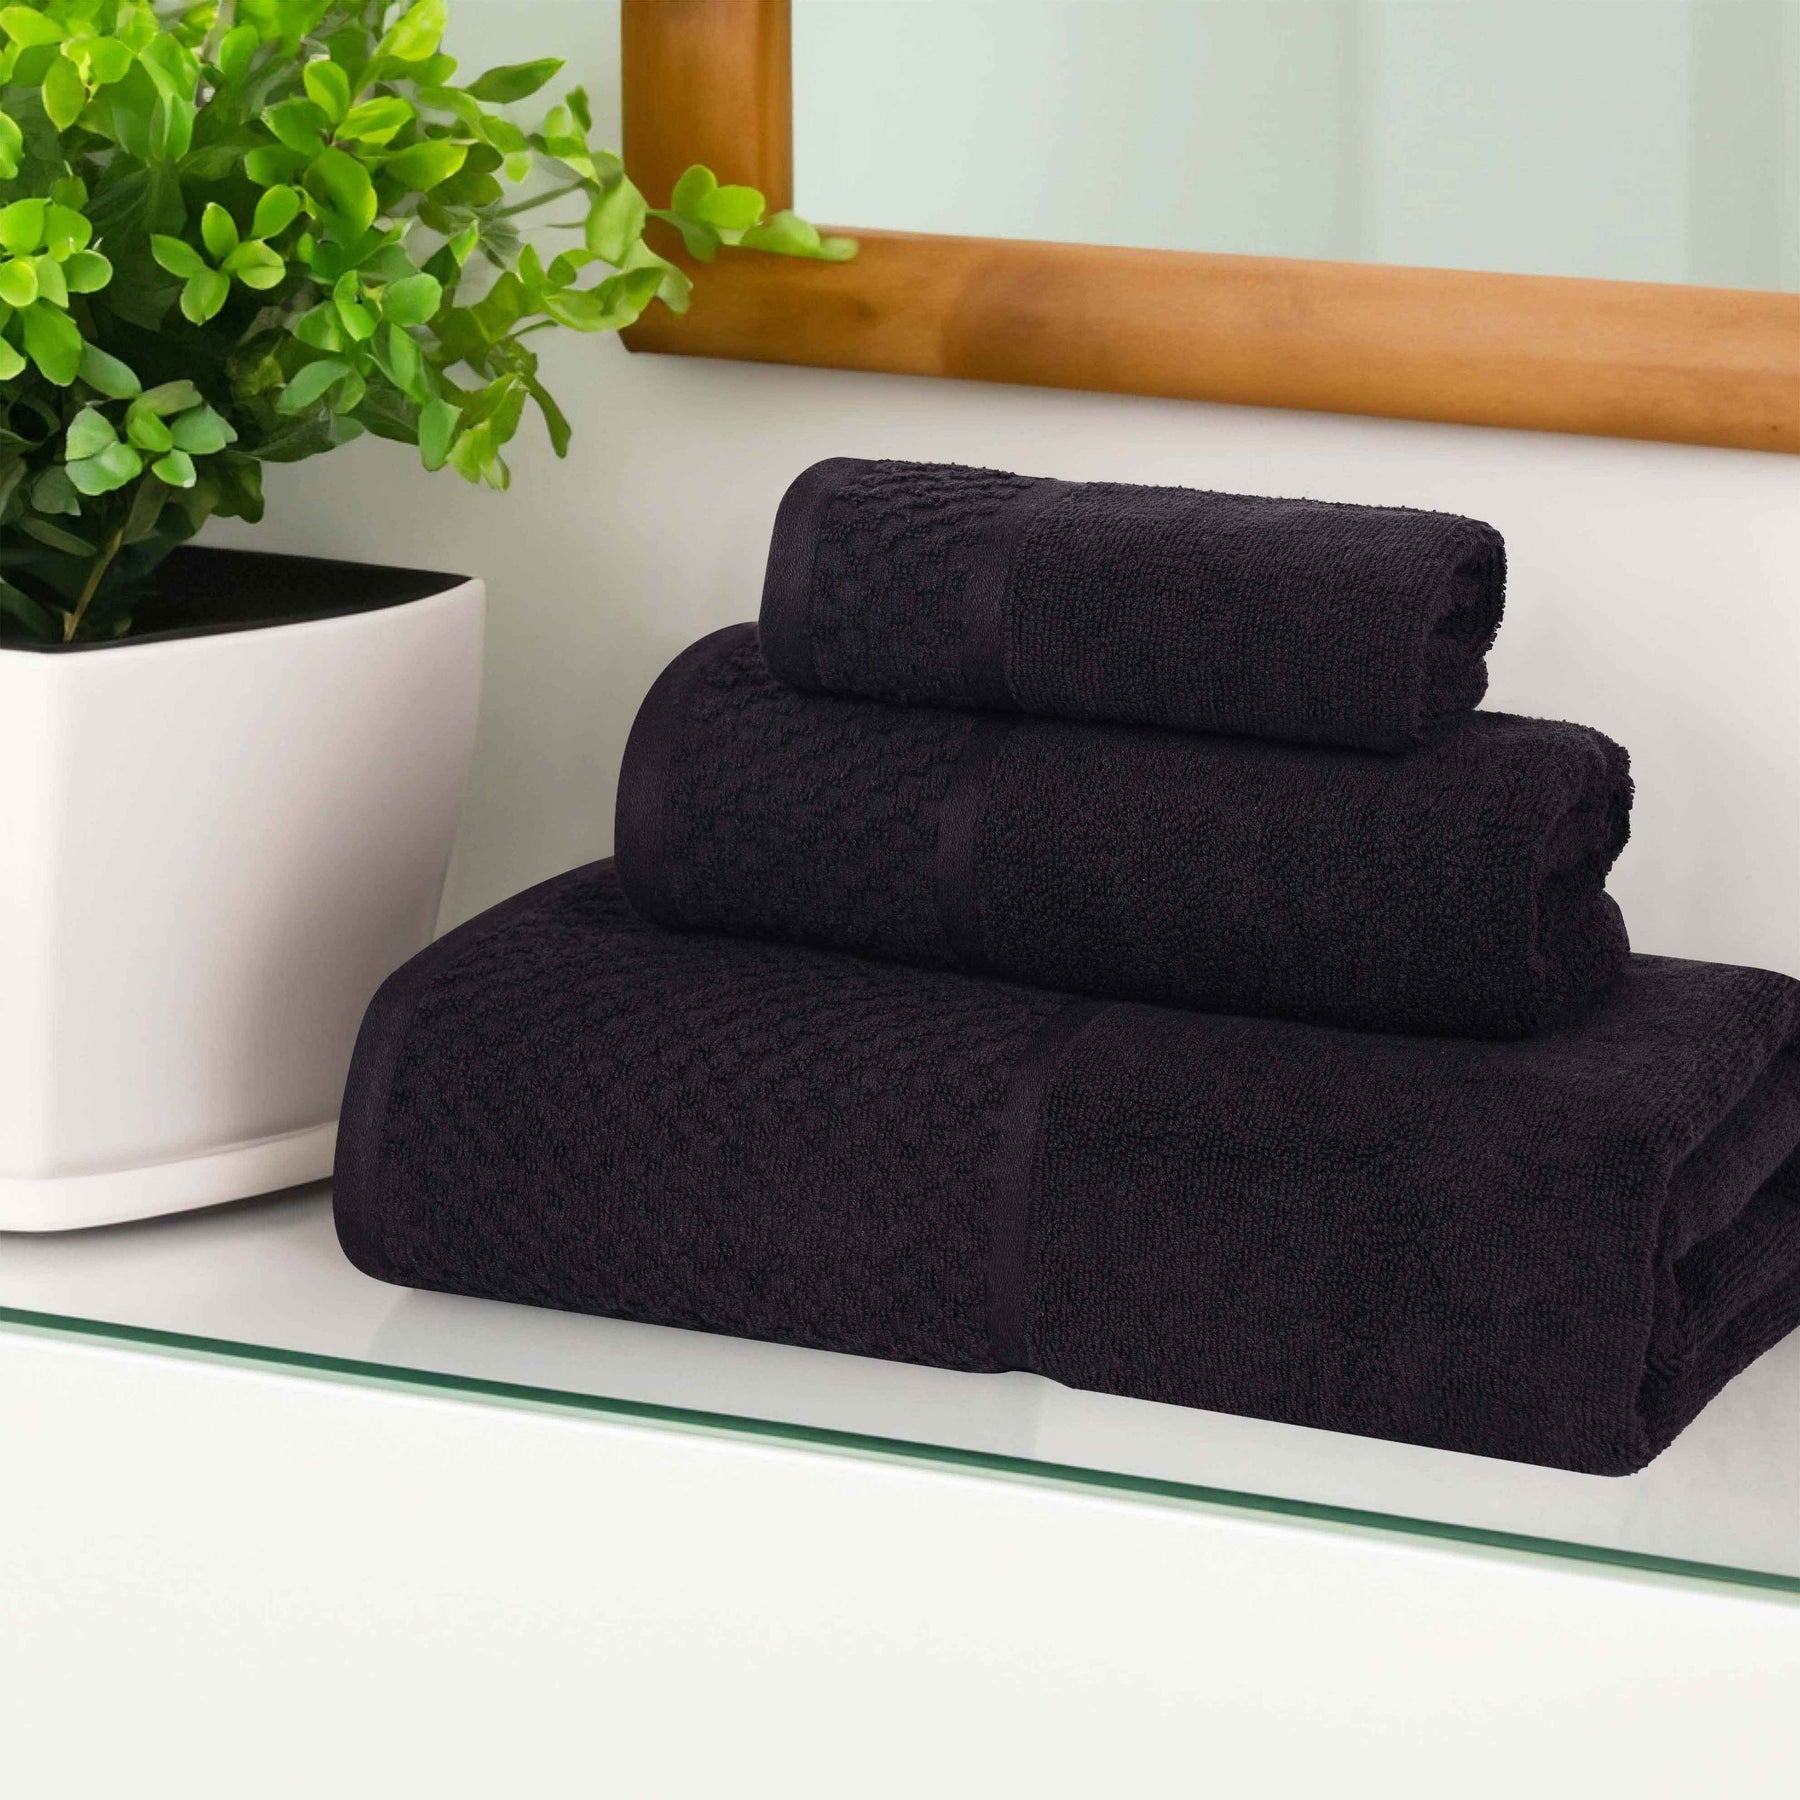 Lodie Cotton Plush Absorbent Jacquard Solid 3 Piece Assorted Towel Set